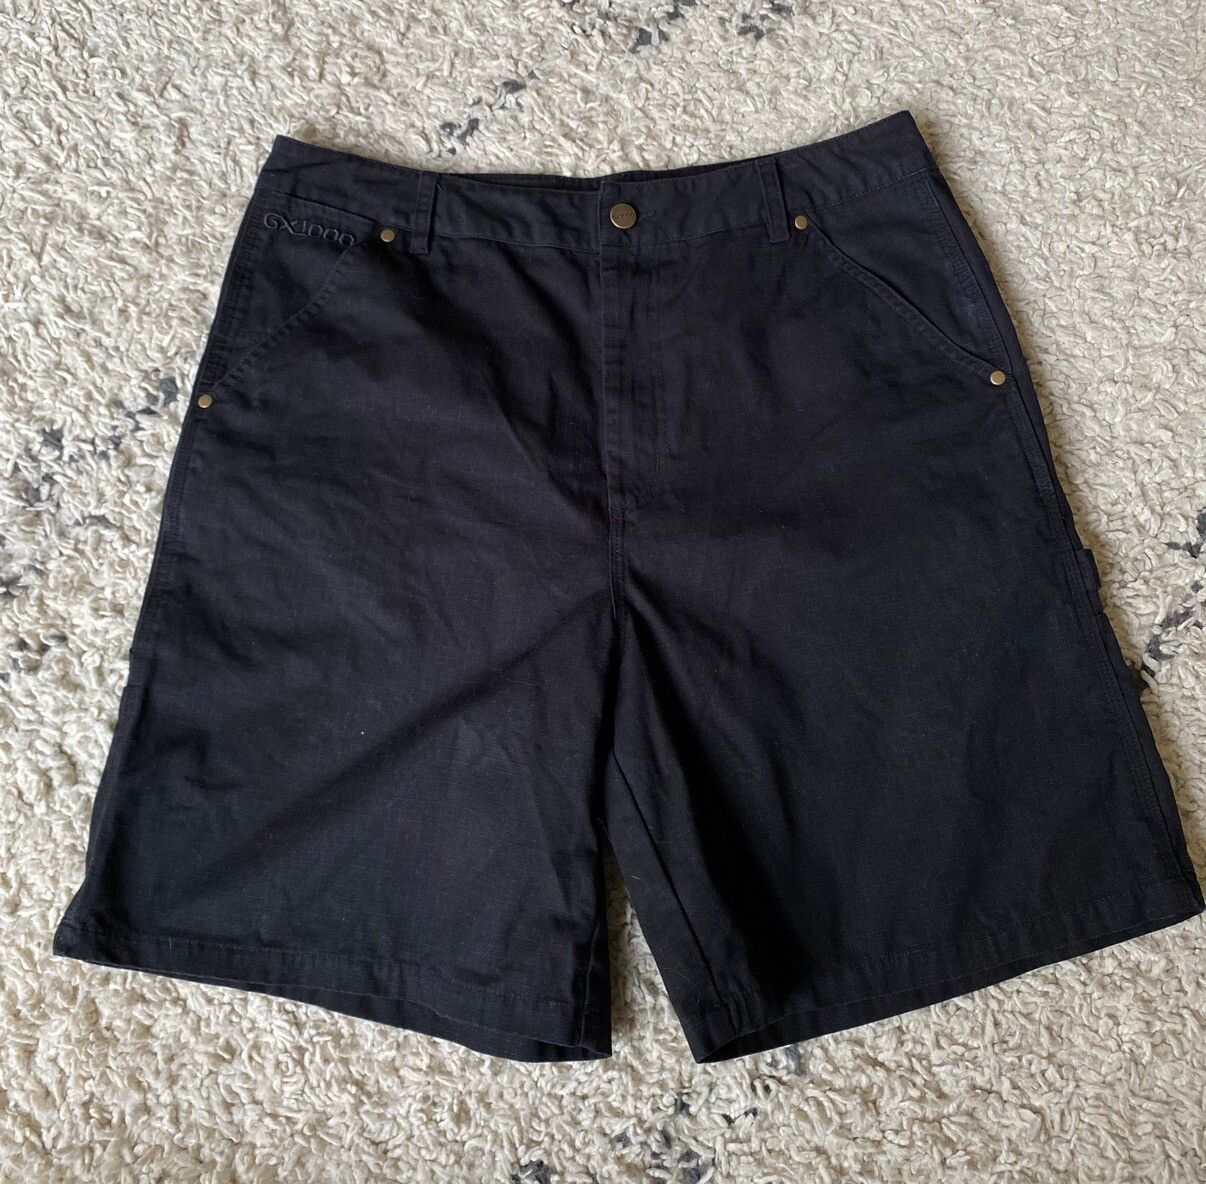 GX1000 Gx1000 Carpenter shorts black | Grailed